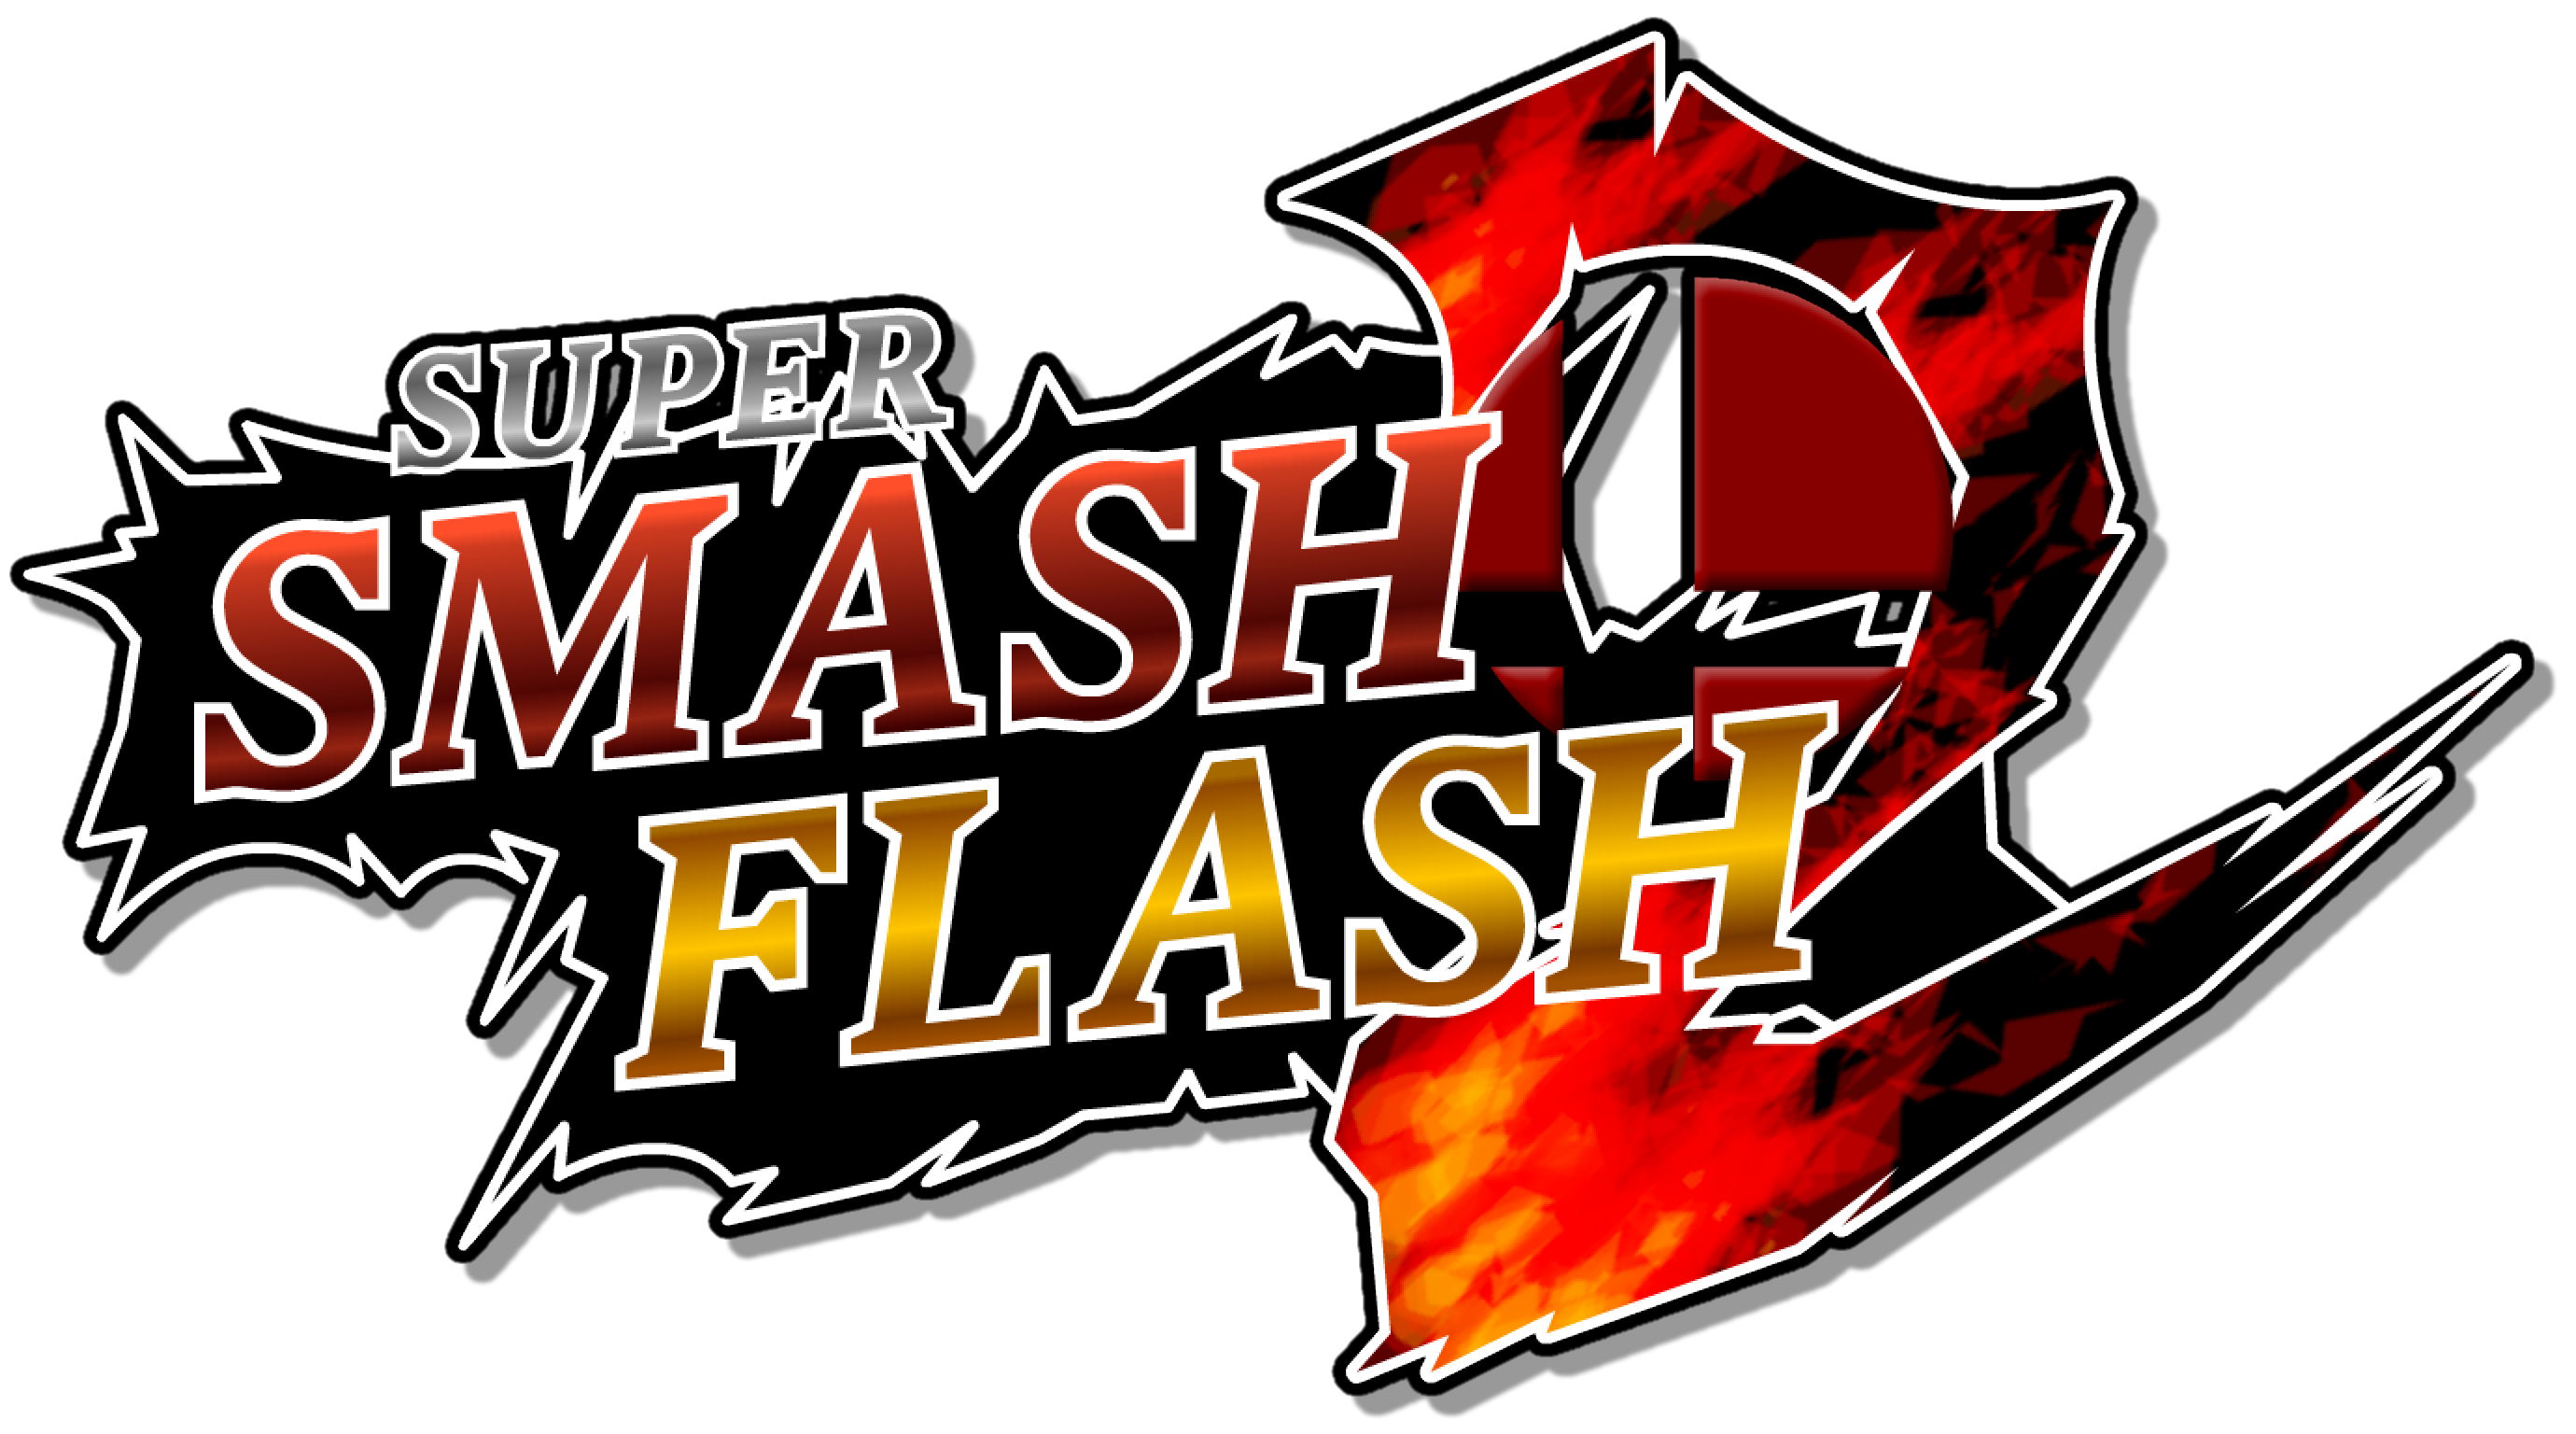 super smash flash 2 beta 1.0.3.2